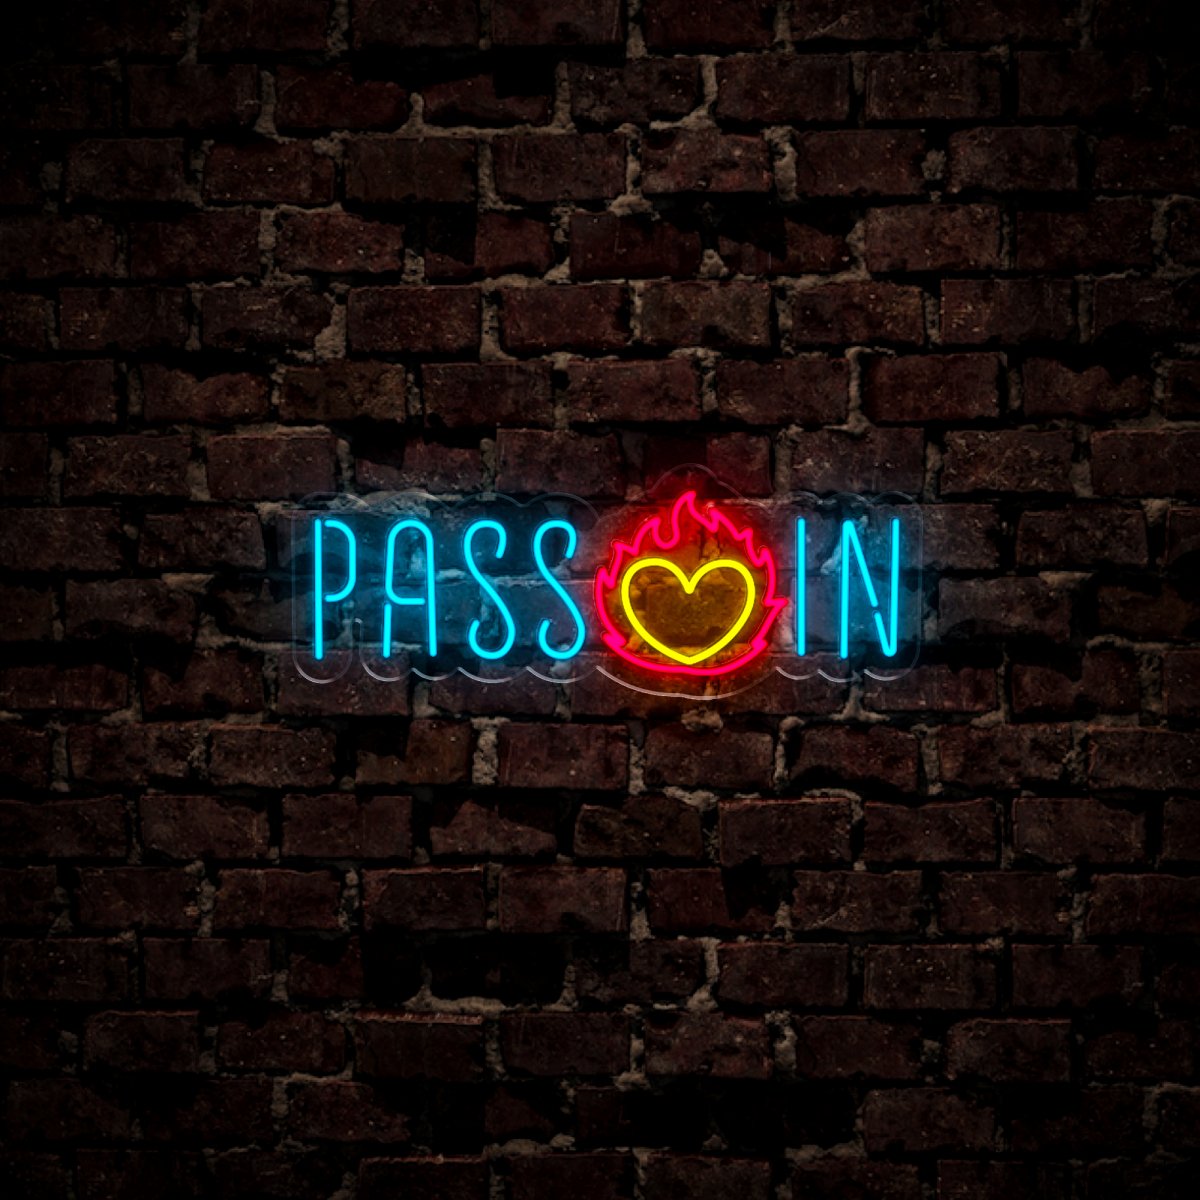 Passion Neon Sign - Reels Custom